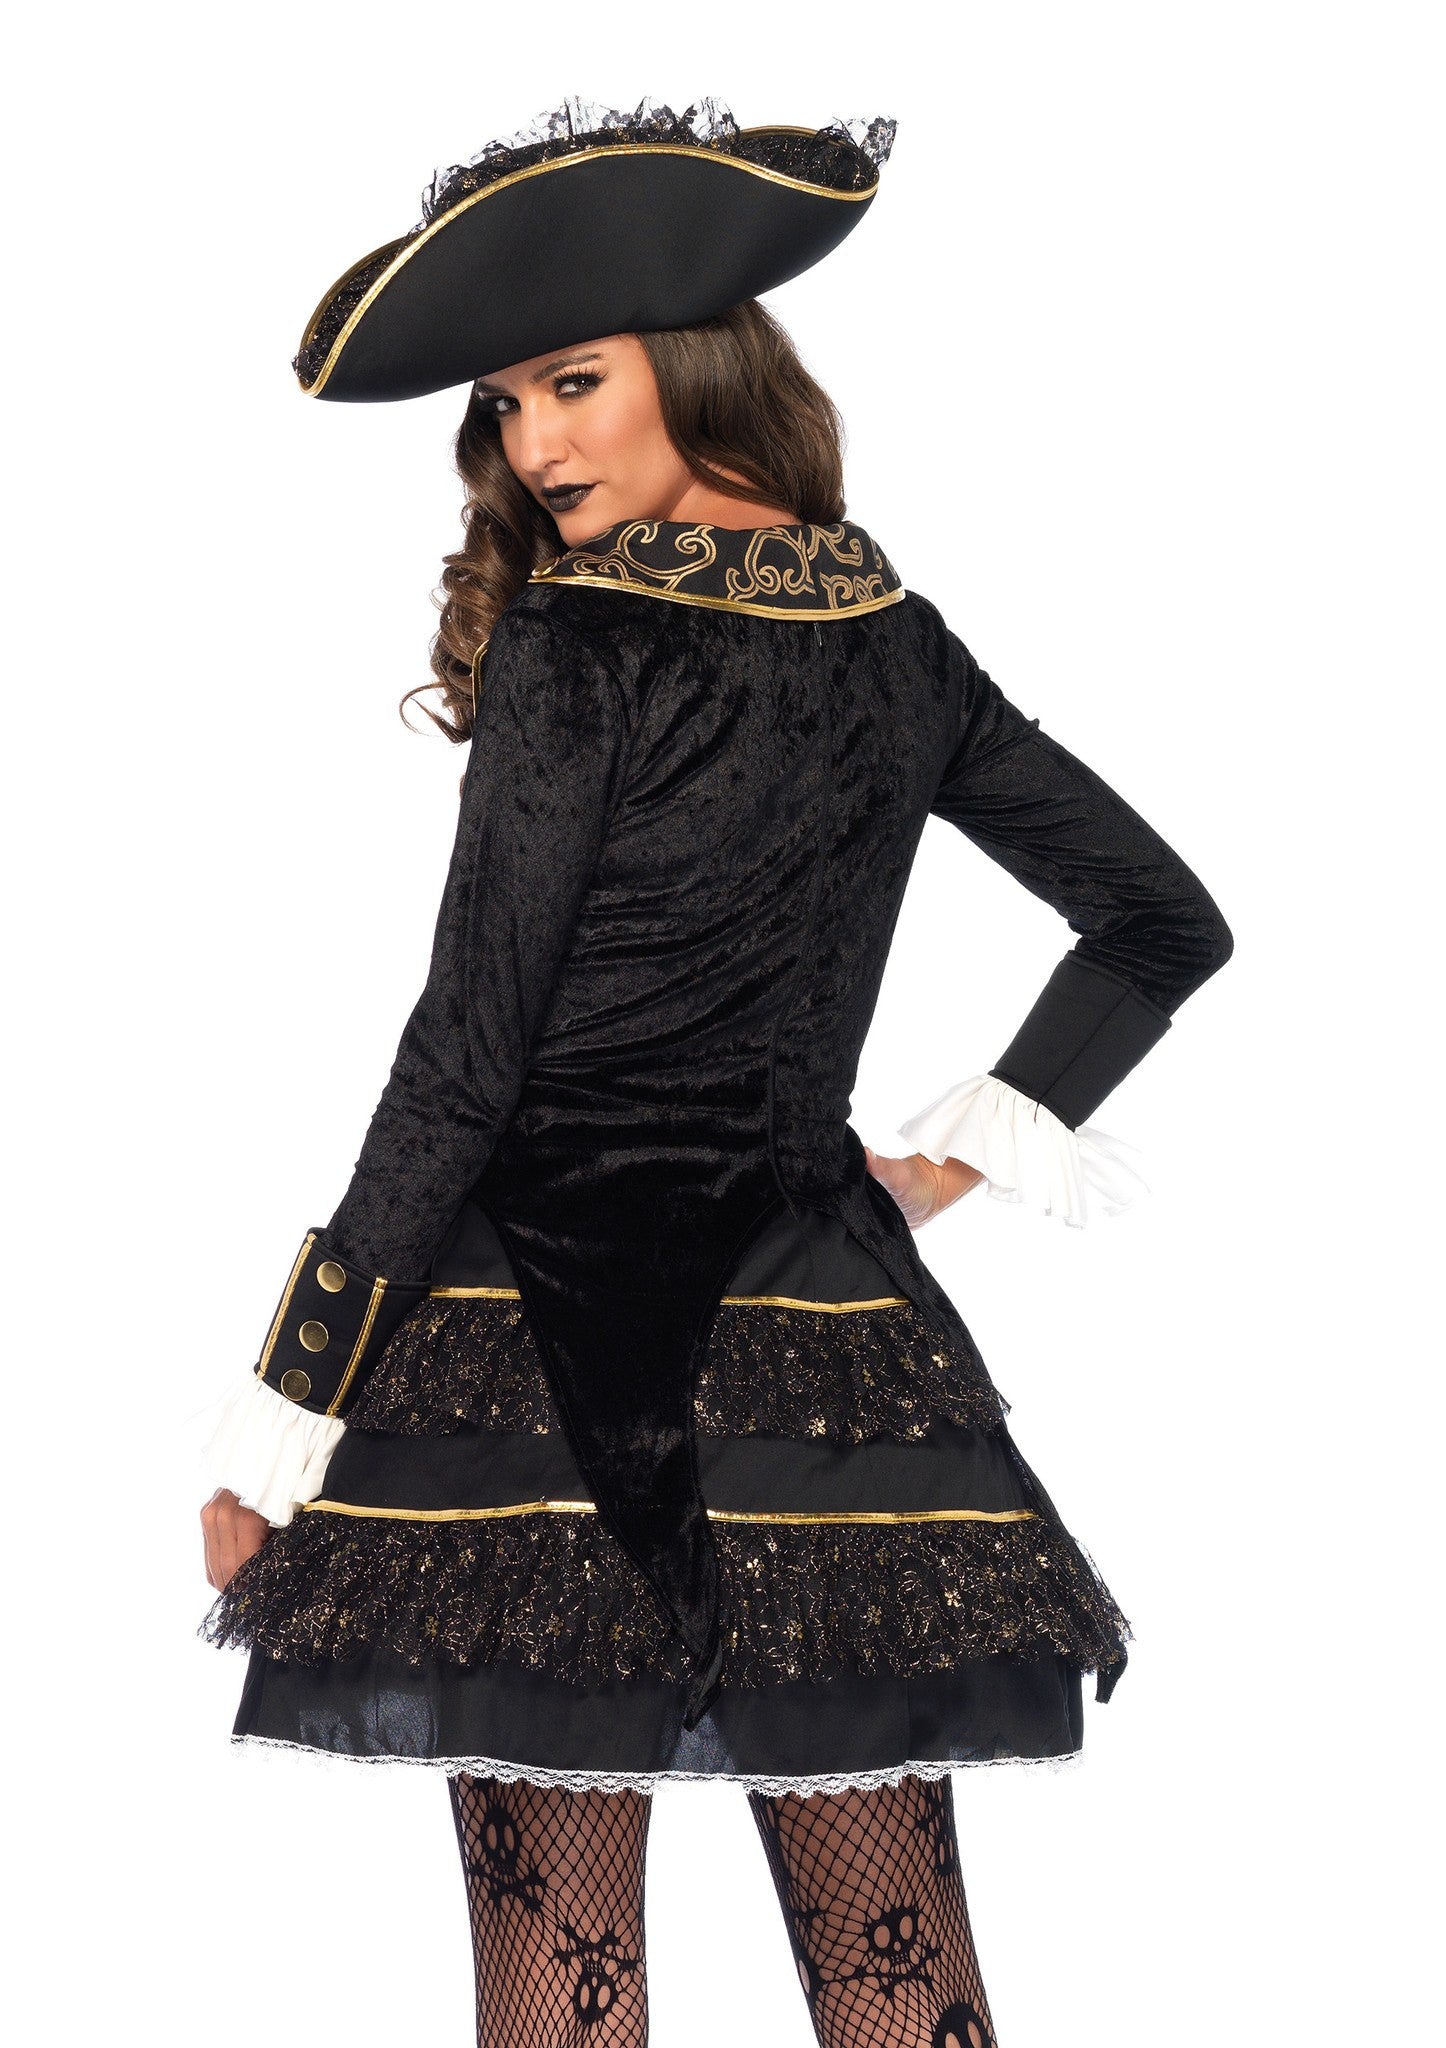 Costume - High Seas Pirate Captain